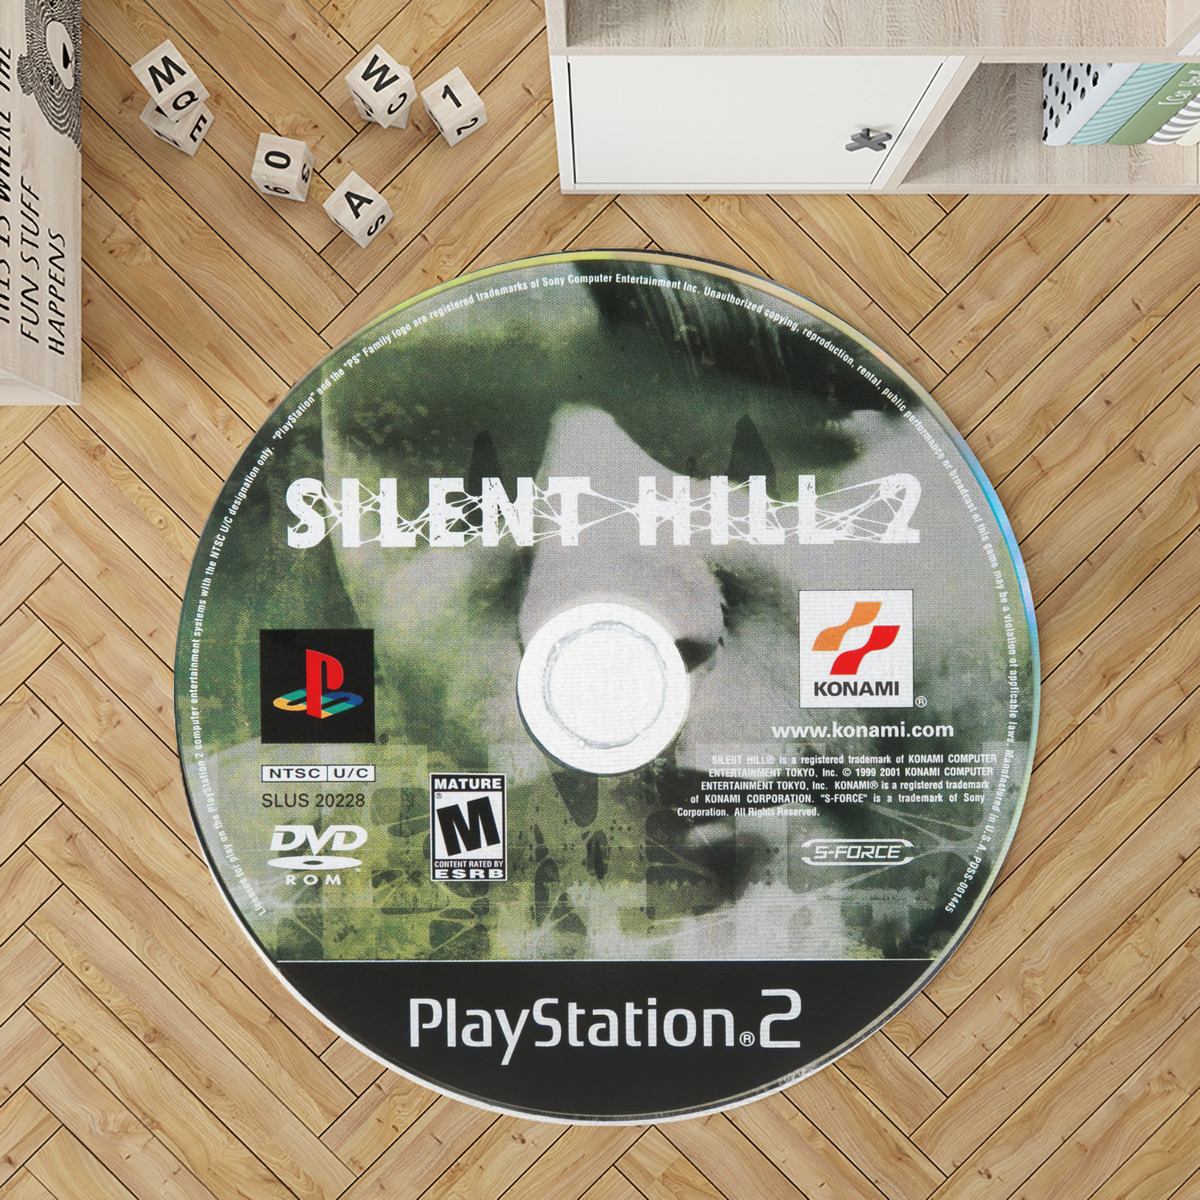 Silent Hill 2 Playstation 2 Disc Round Rug Carpet